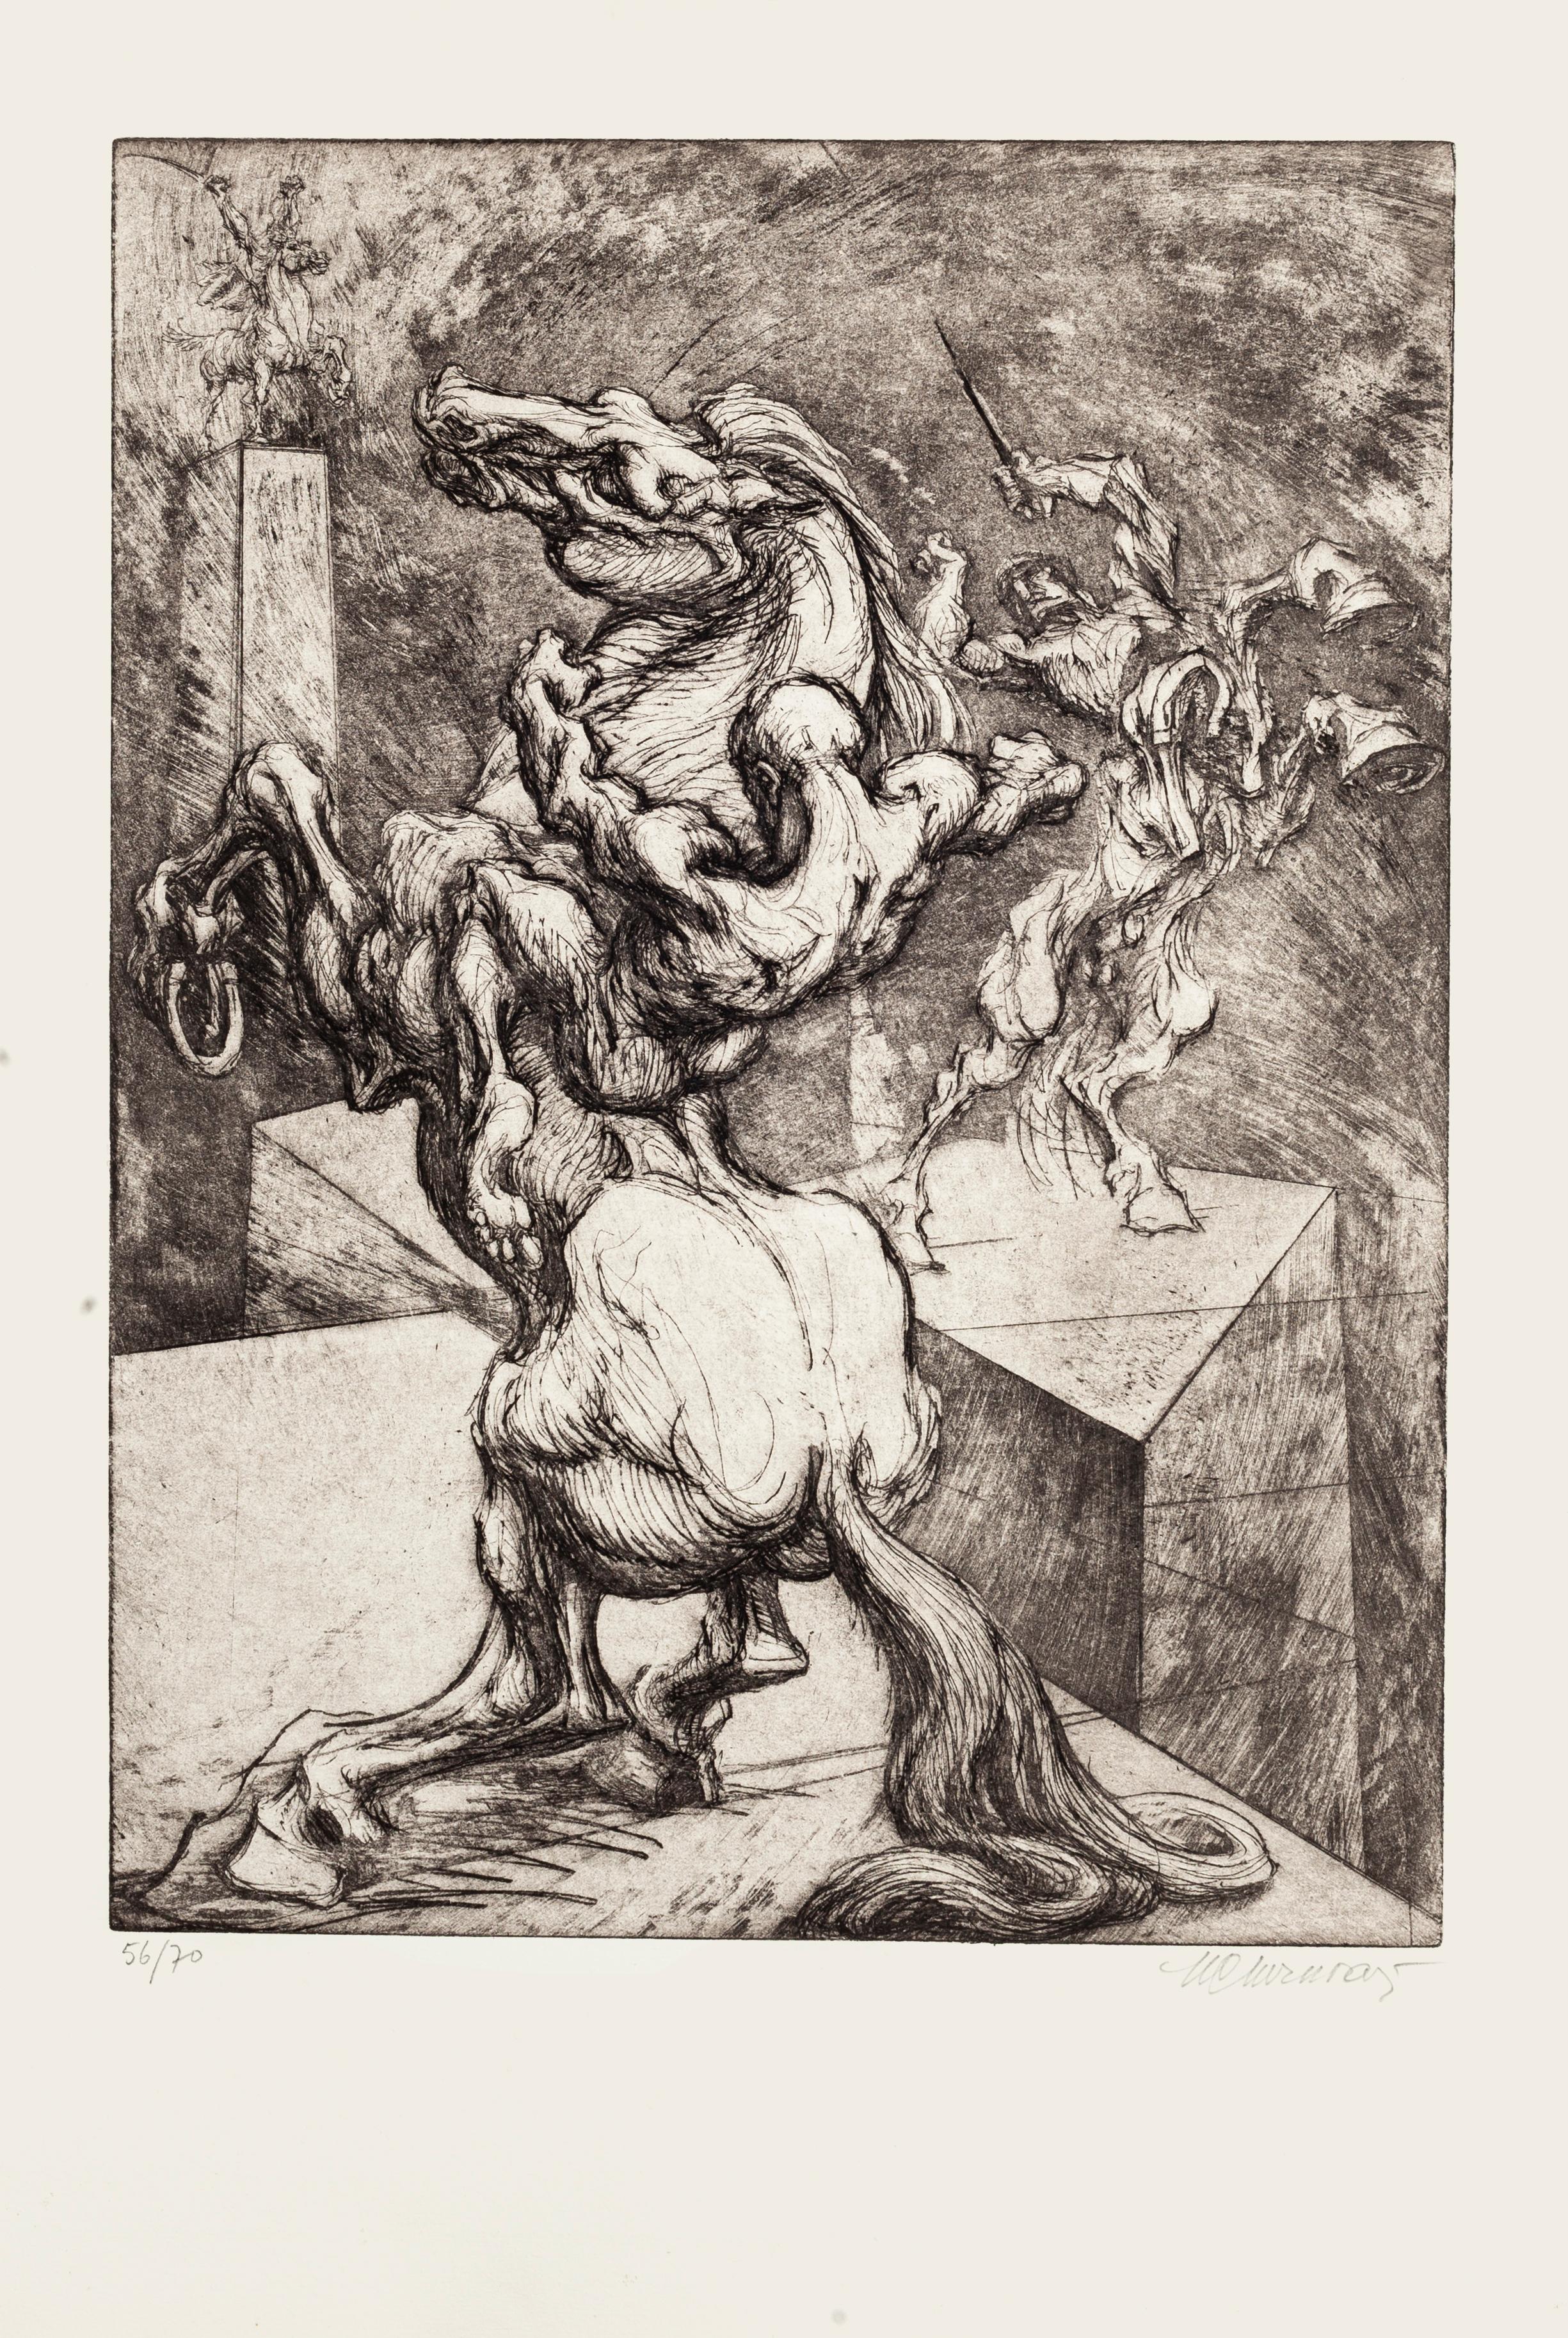 Marcel Chirnoaga Animal Print - Mighty Horse - Original Etching by M. Chirnoaga - Late 20th Century